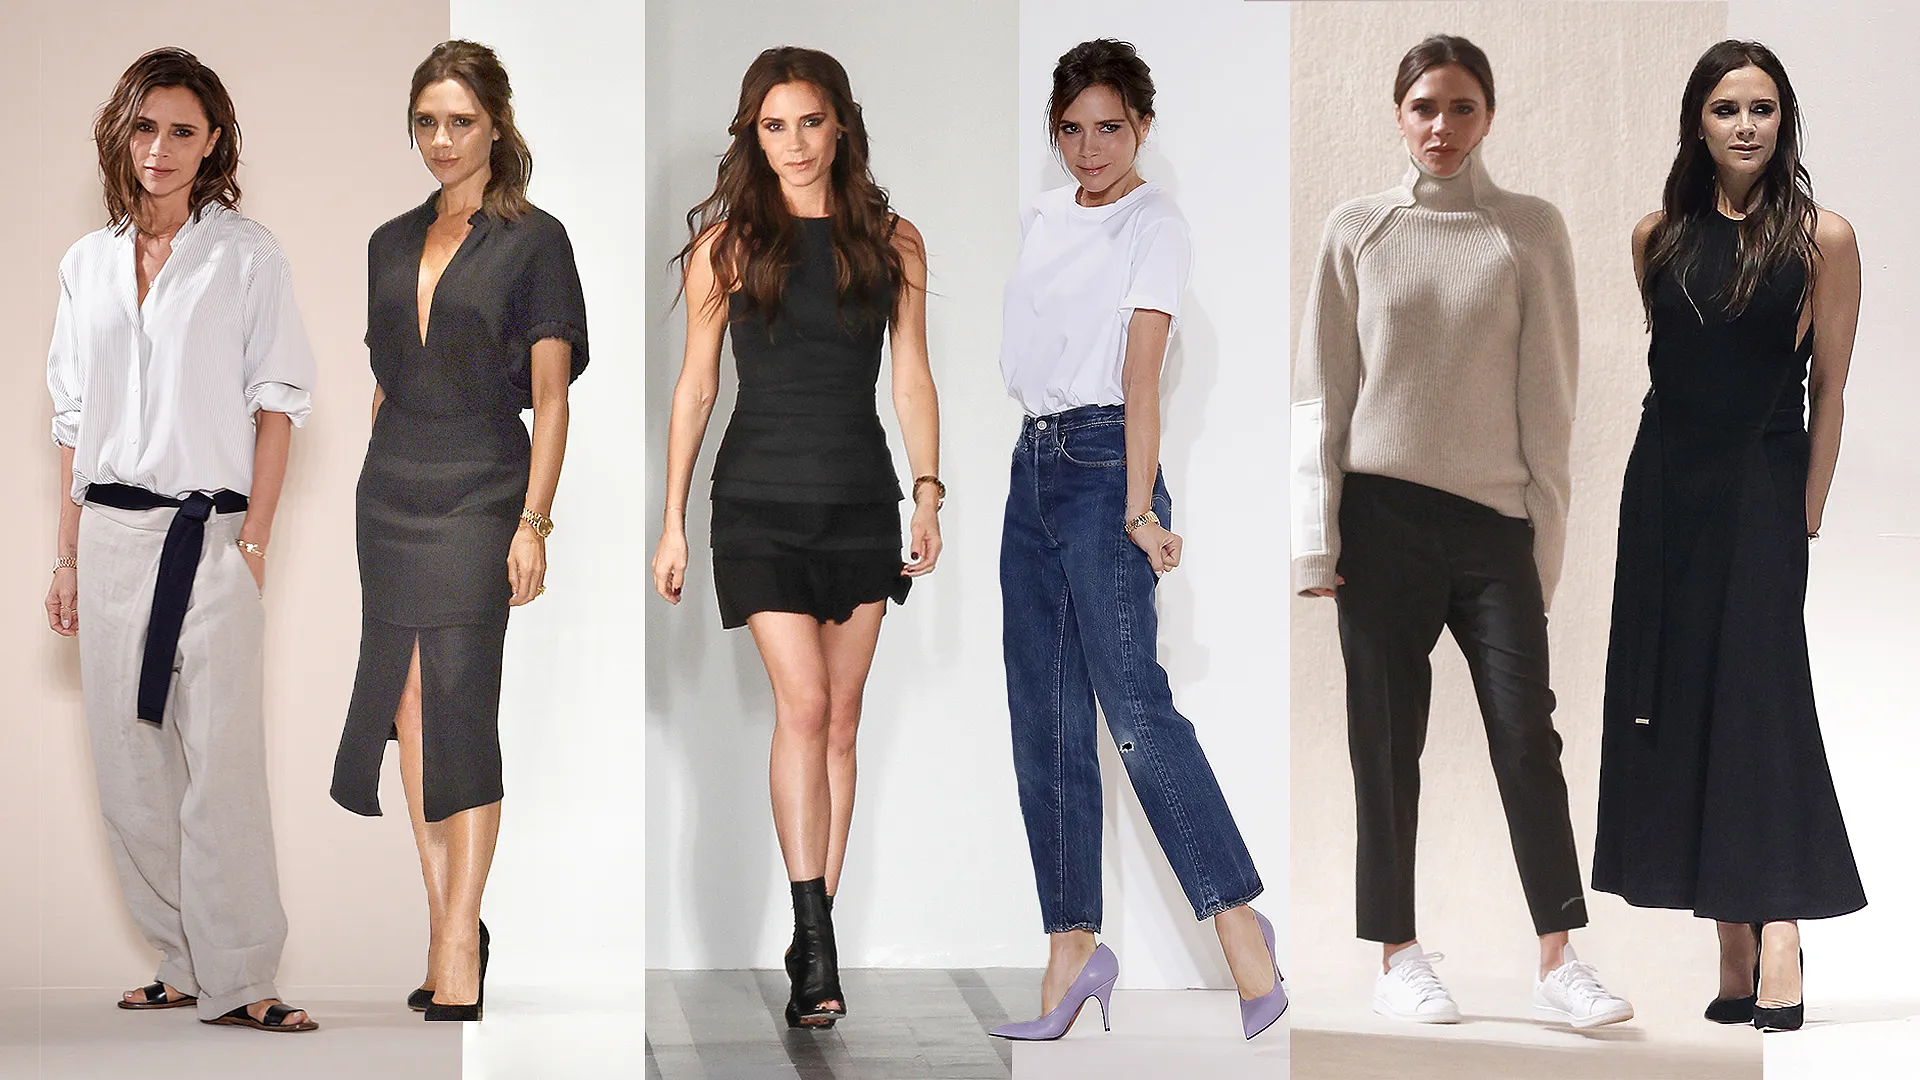 Victoria Beckham flaunting her fashion label